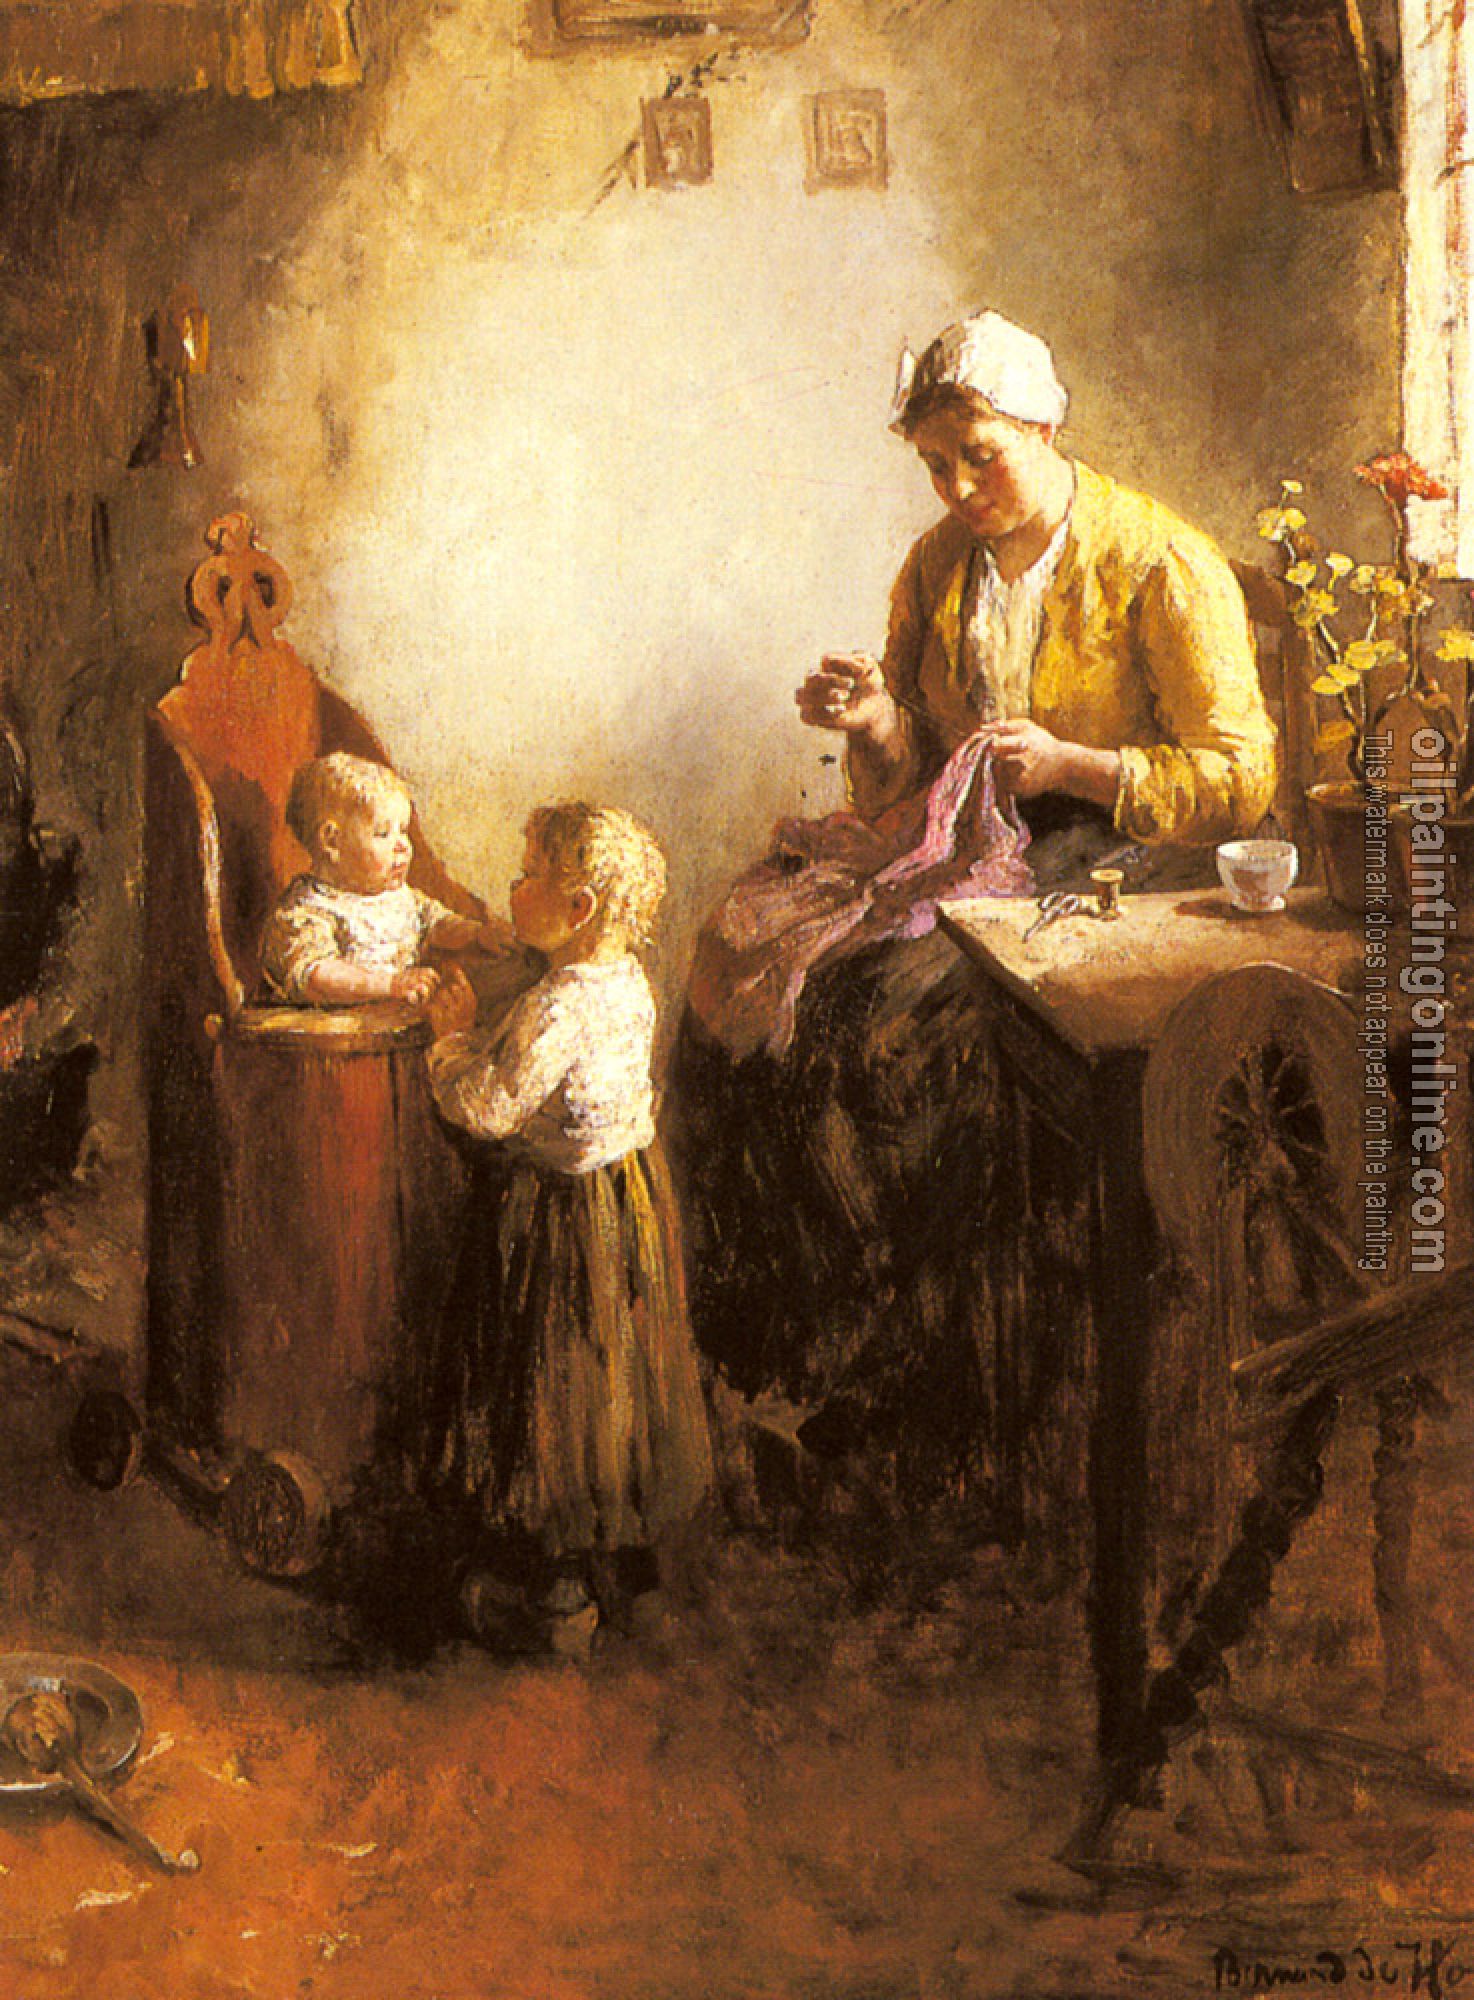 Bernard de Hoog - A Family In An Interior